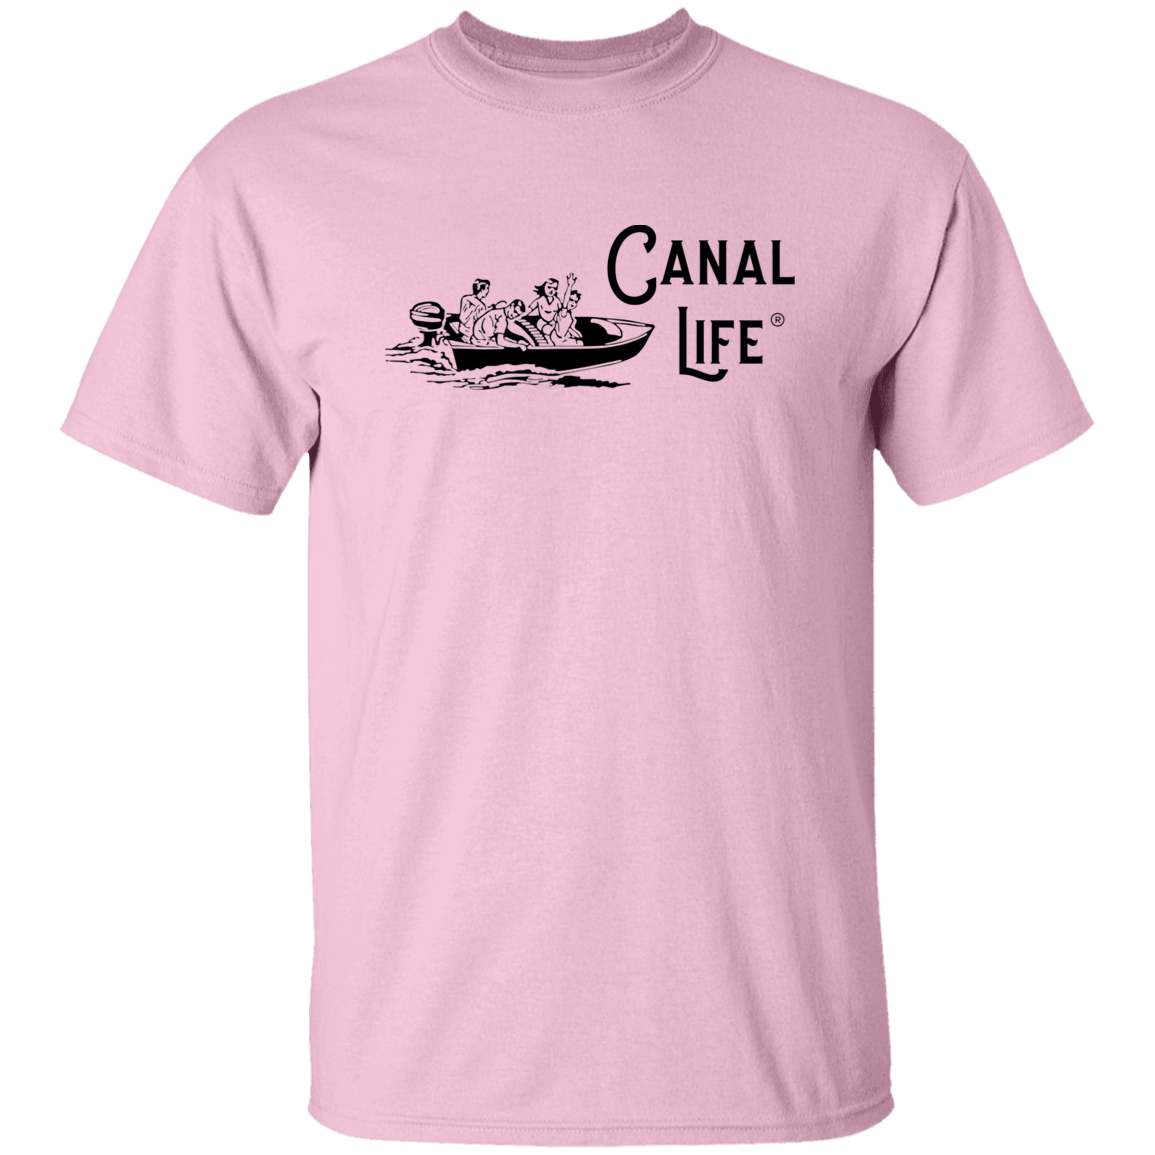 Vintage Boat Canal Life Black Letter Tee